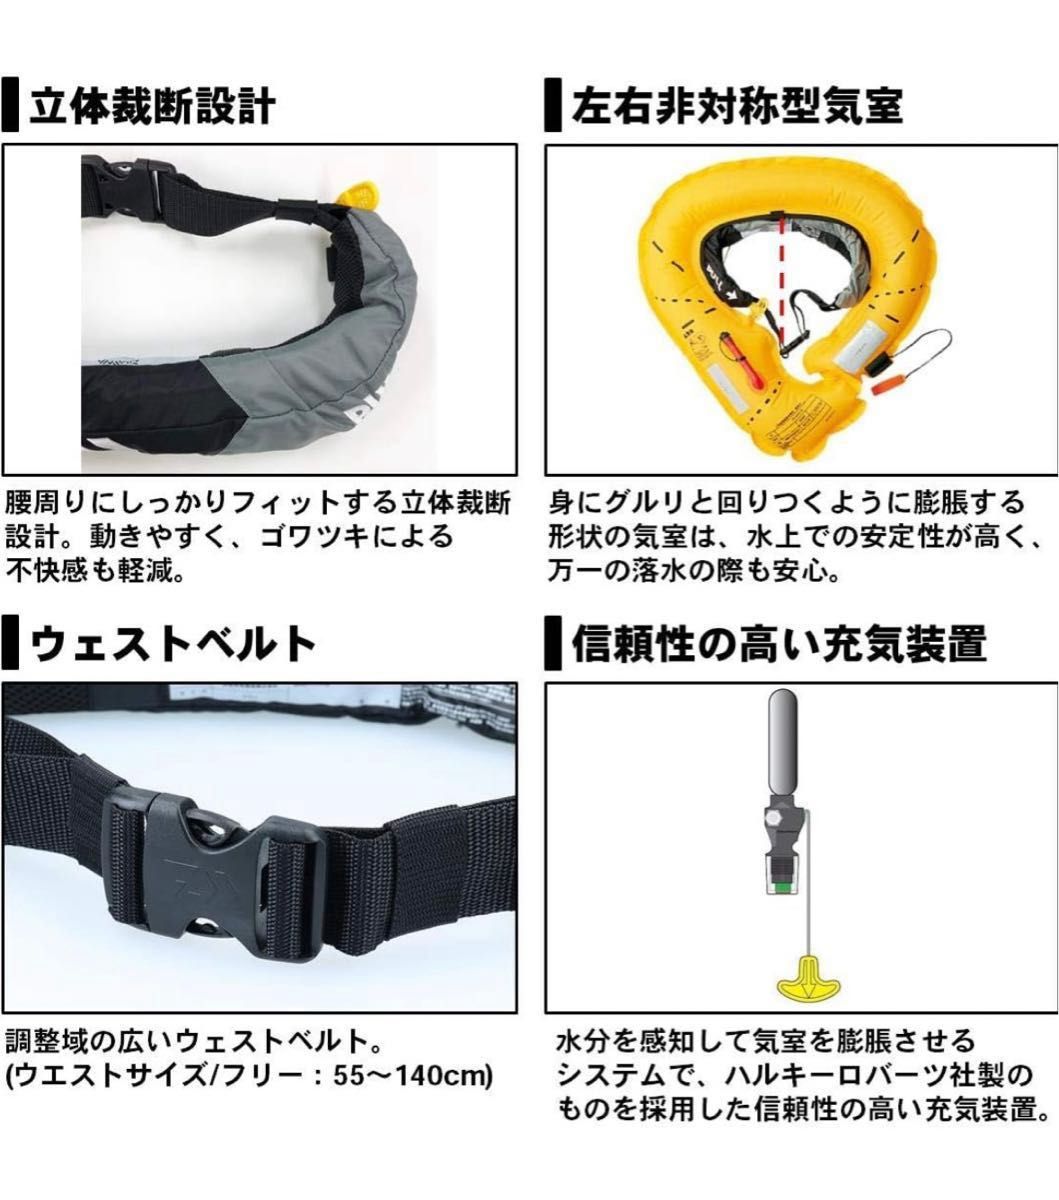 Daiwa ライフジャケット (ウエストタイプ自動、膨脹式)桜マーク付き-